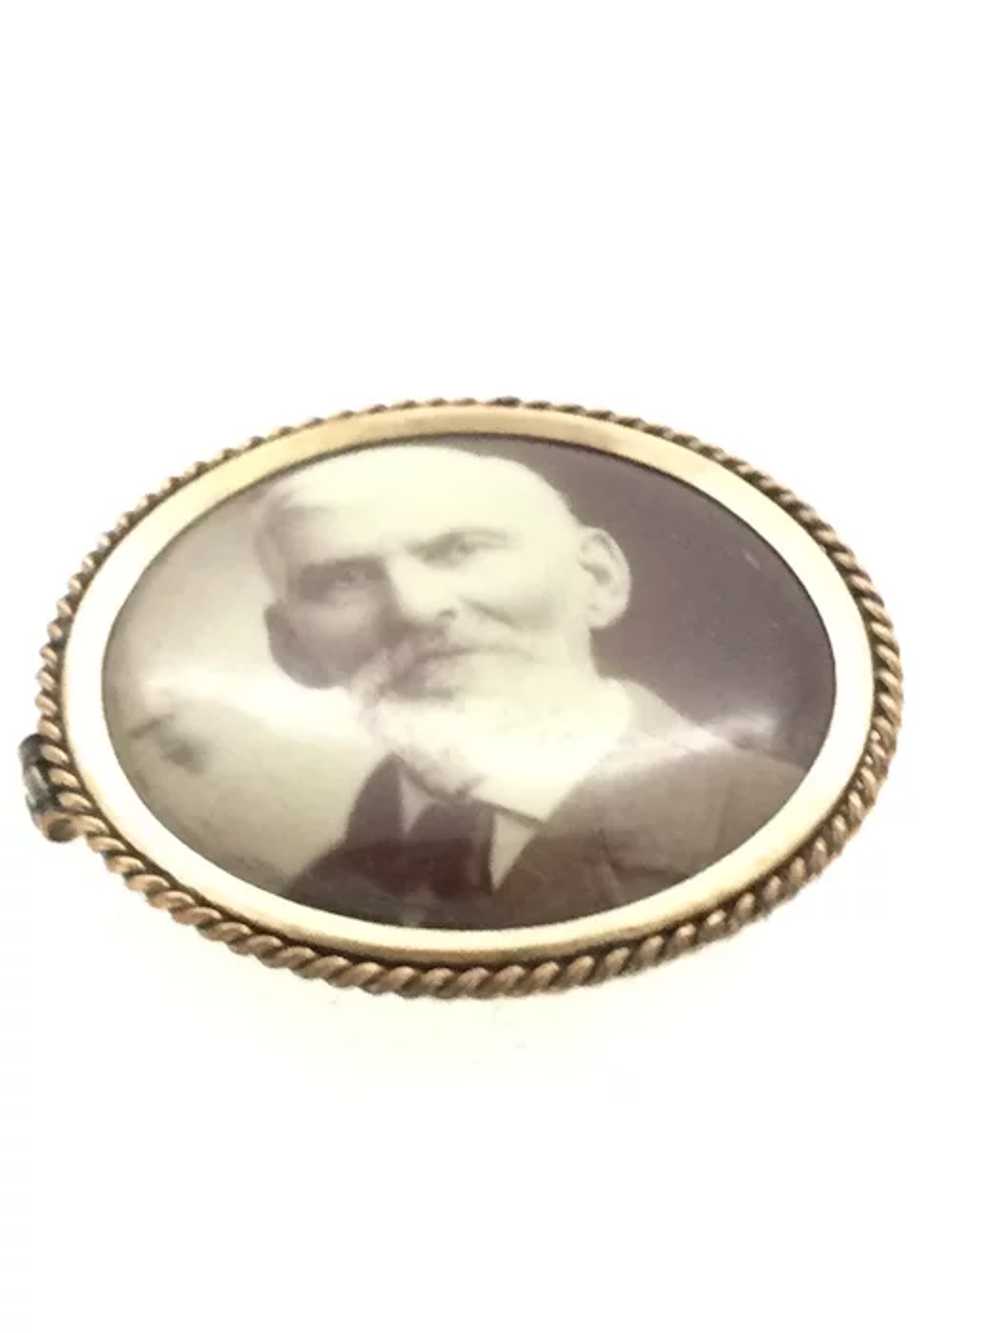 Edwardian Miniature Photograph Brooch Pin - image 4